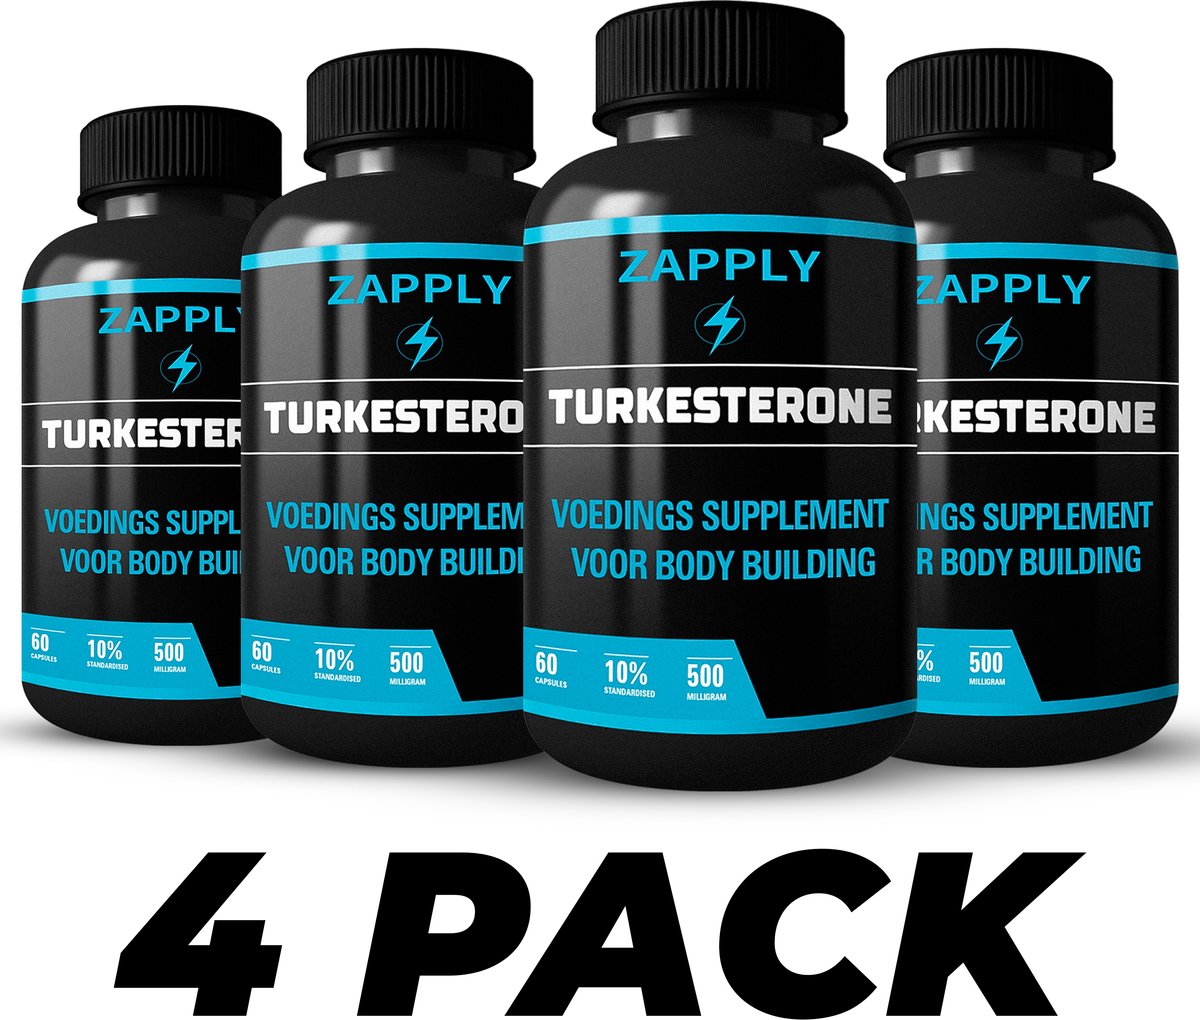 Zapply- Turkesterone 10% - 4 Pack - TURK PRO 240 capsules (500mg) - Testosteron booster - Muscle builder - Spiergroei - Afvallen - Droogtrainen